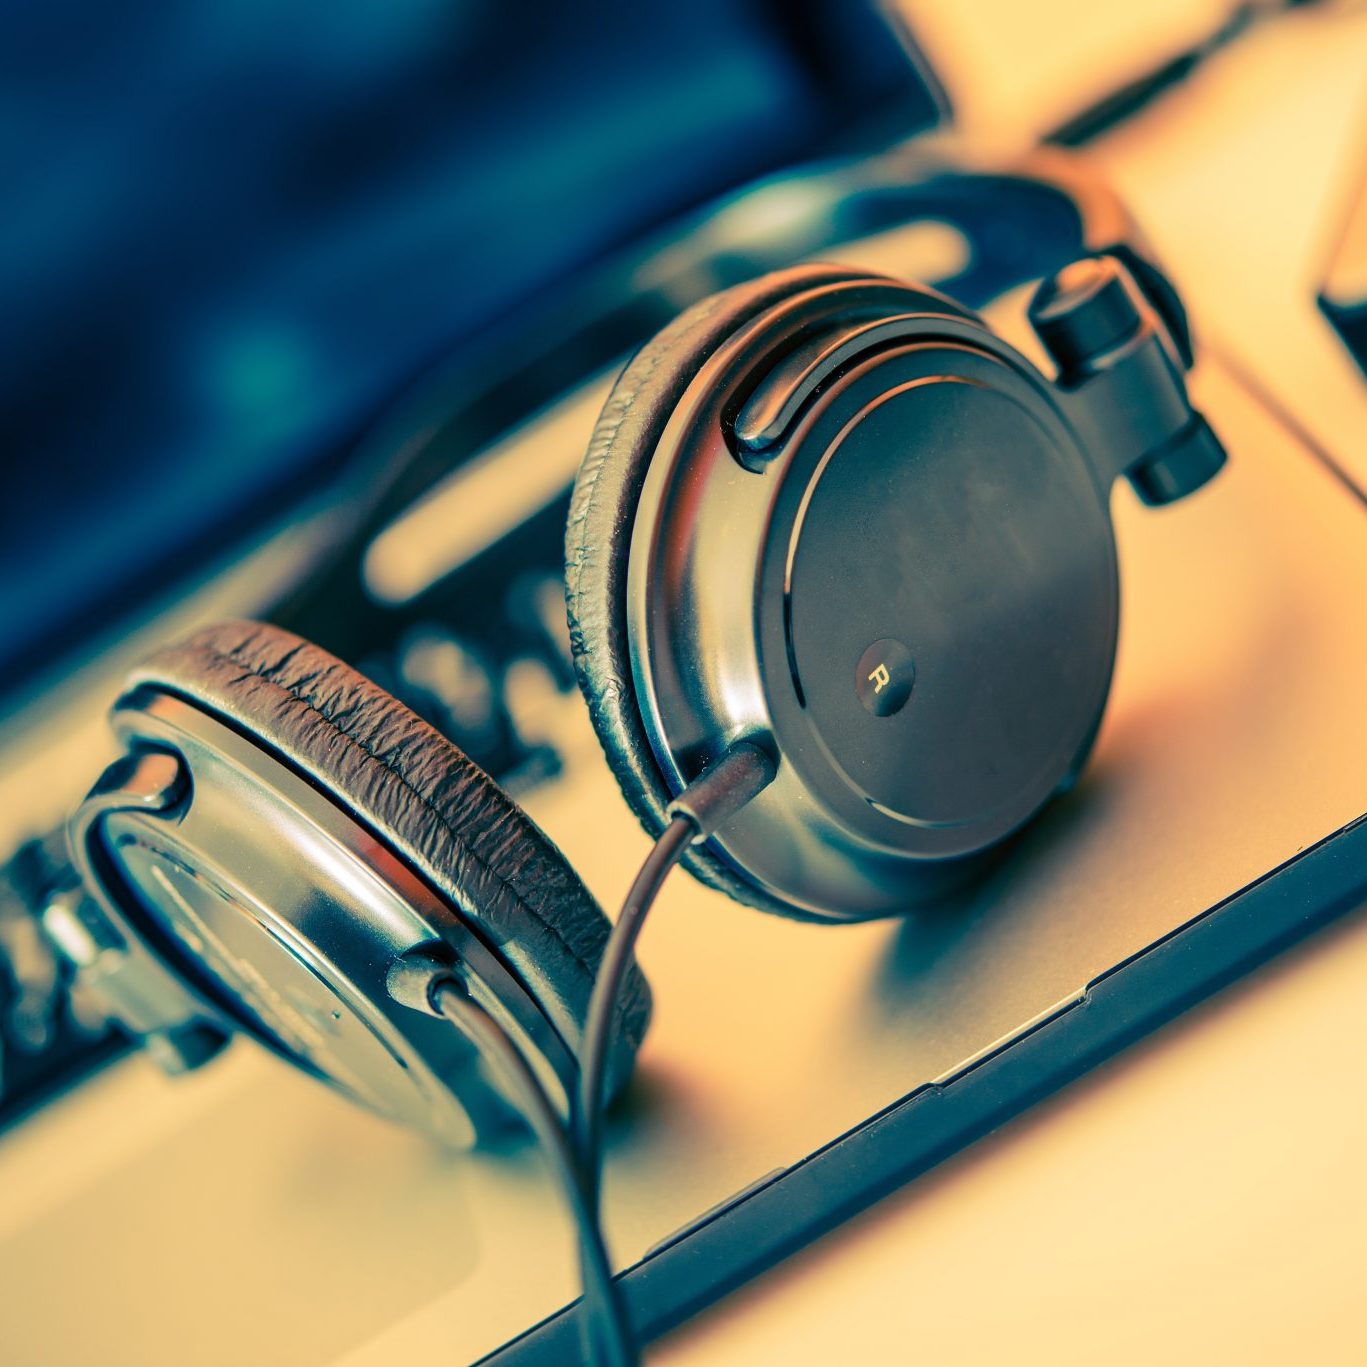 Headphones on Laptop Computer. Online Music Listening. Music Concept.